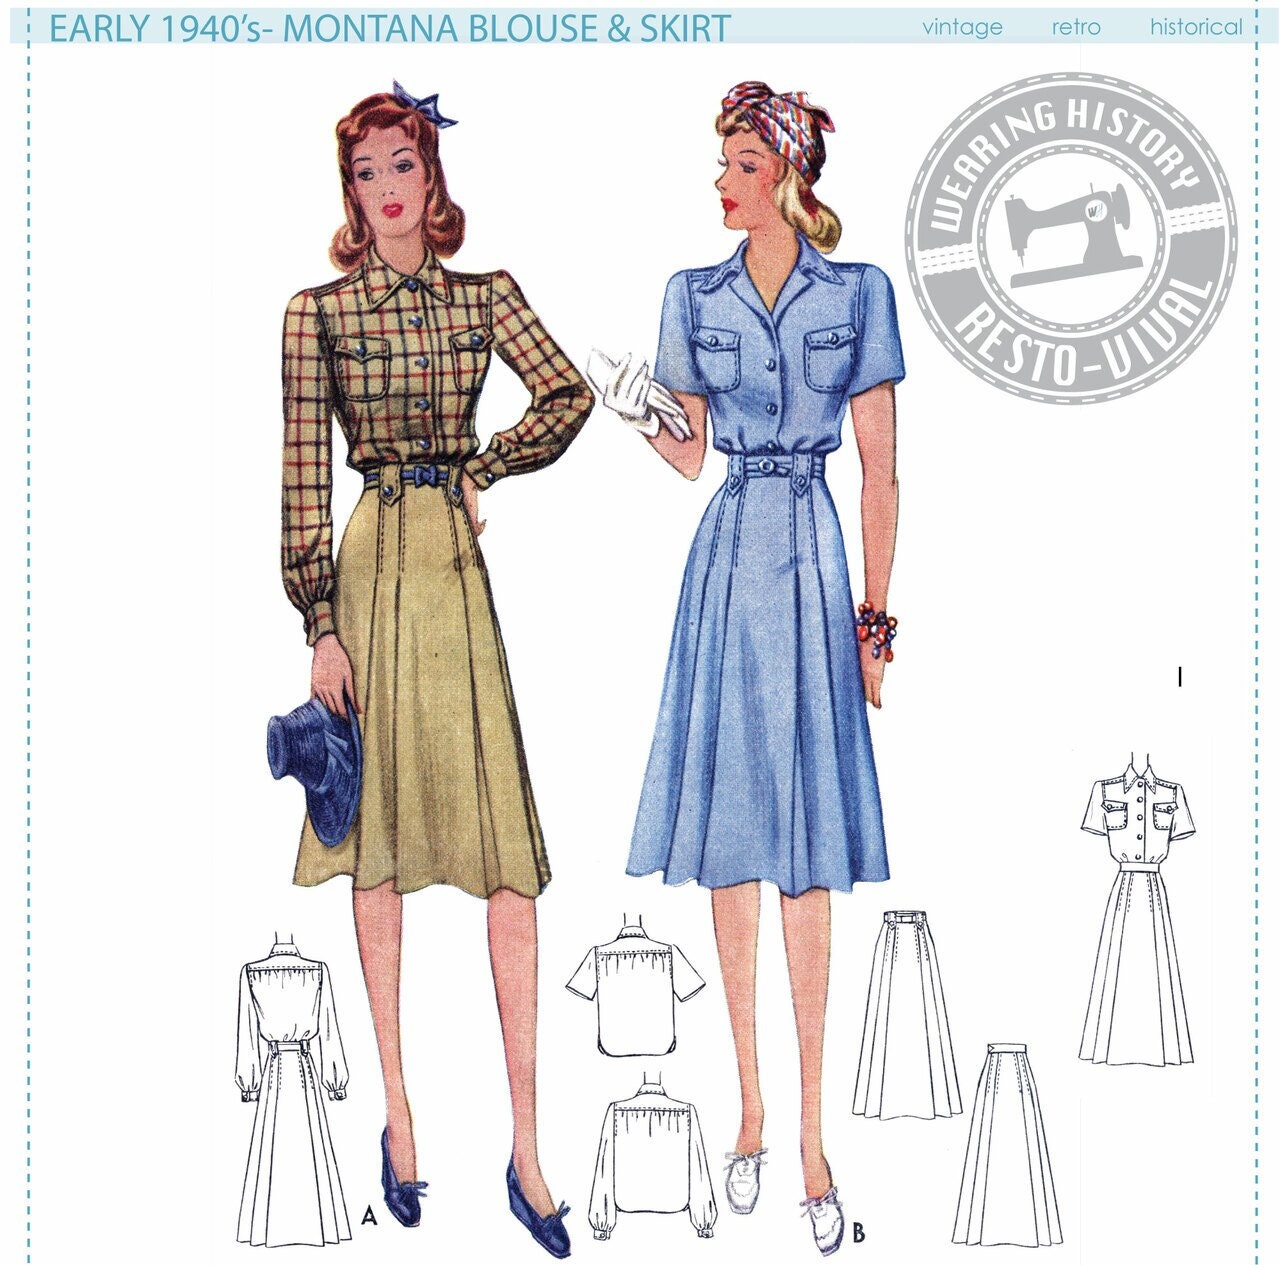 PRINTED PATTERN- Early 1940s Montana Blouse & Skirt Pattern- 30